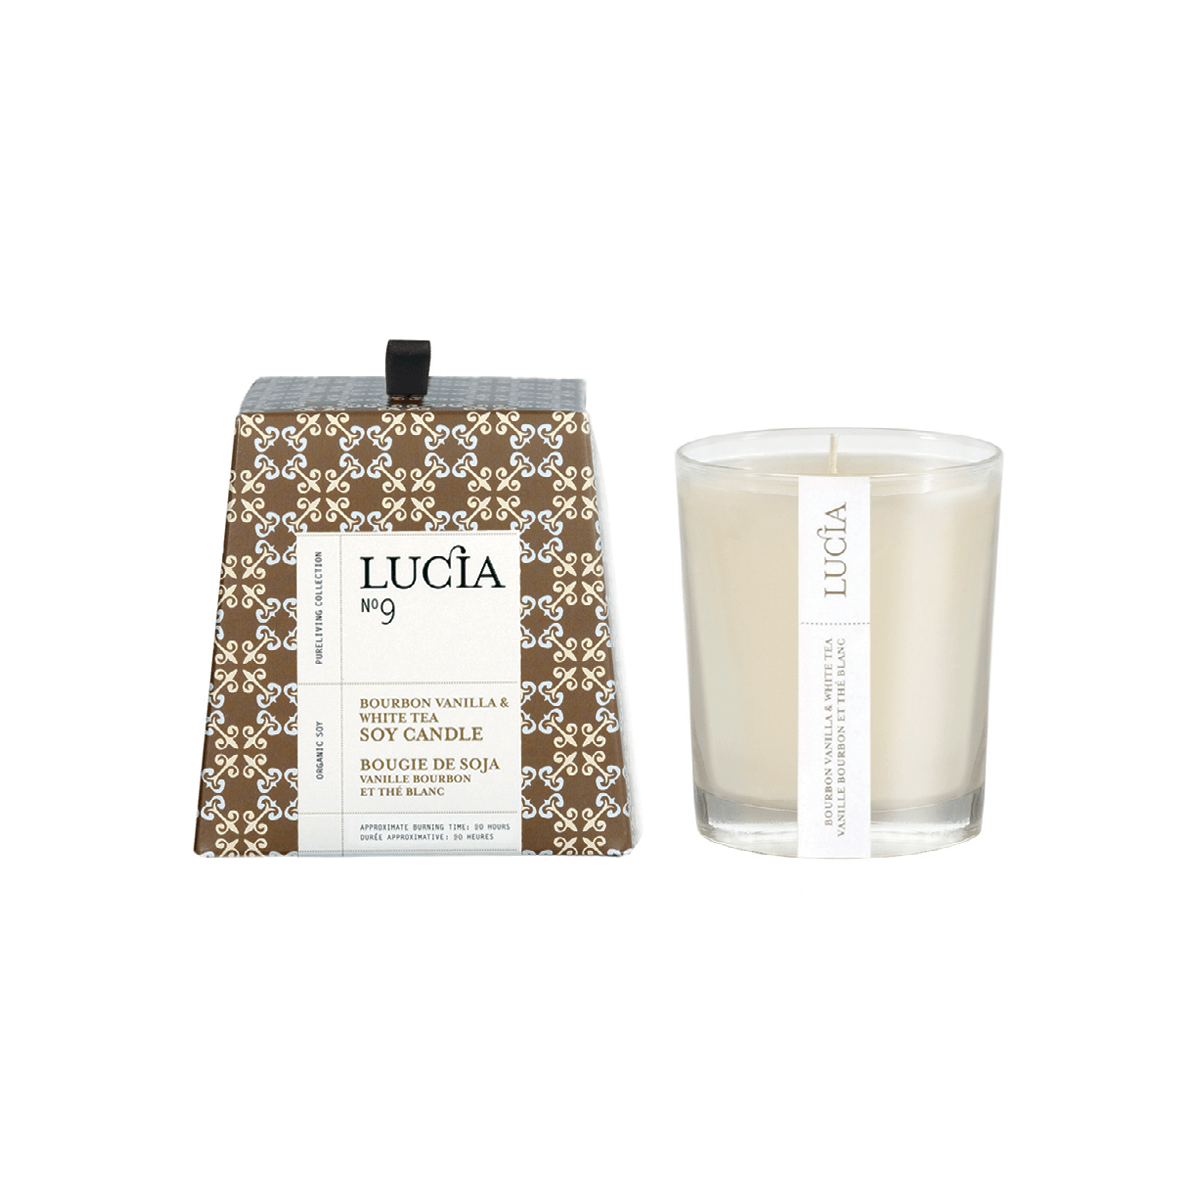 Lucia N°9 - Bourbon Vanilla & White Tea Soy Candle